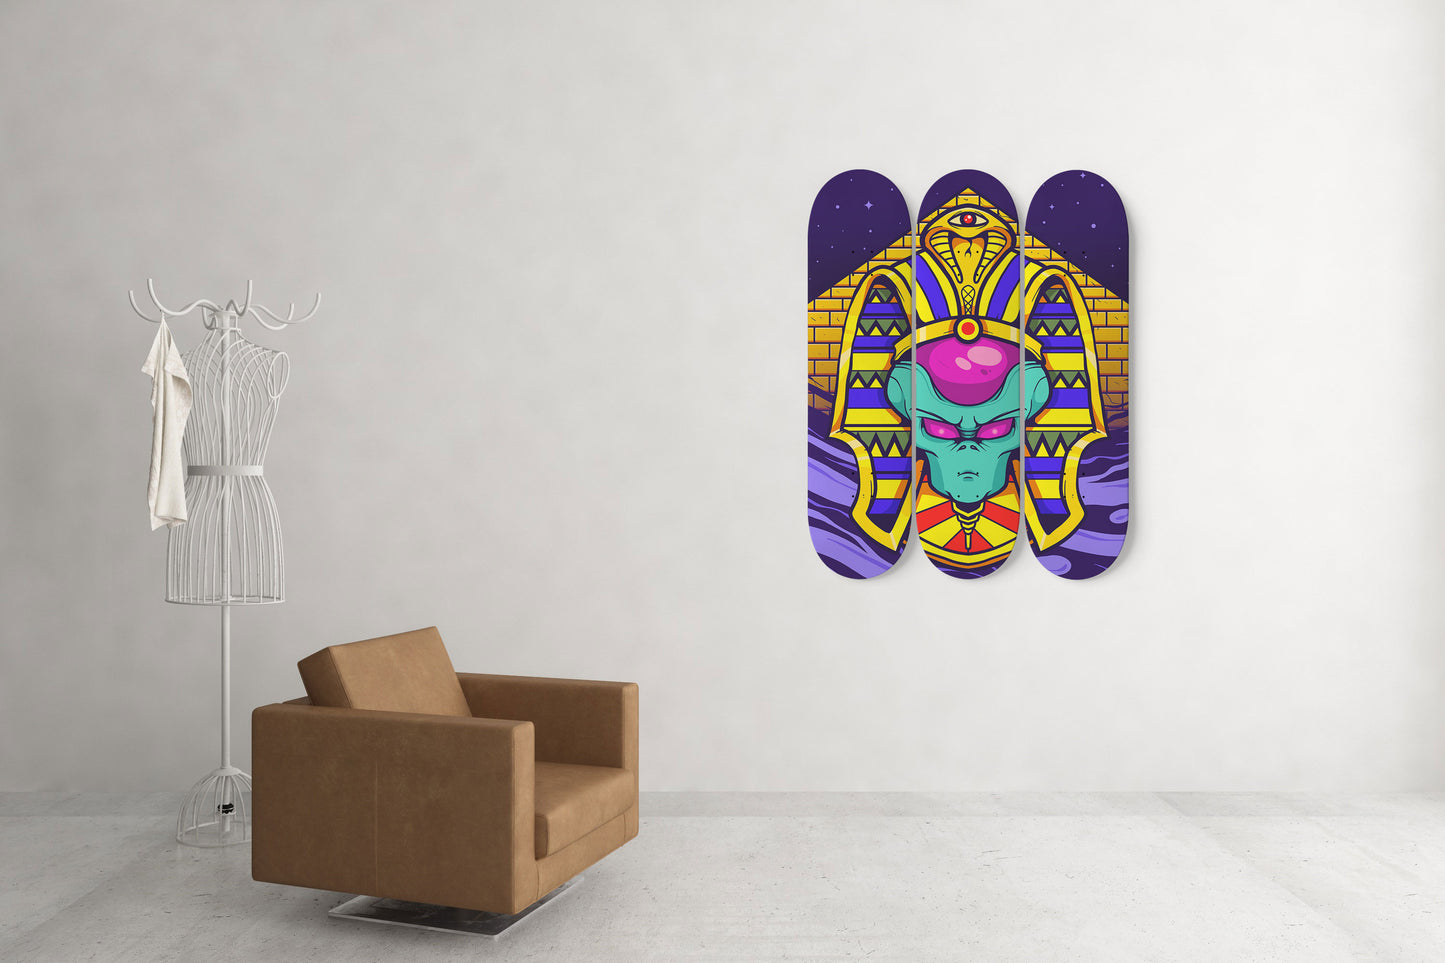 Pharaoh's Secret 3-Deck Skateboard Wall Art: Mystical Treasures